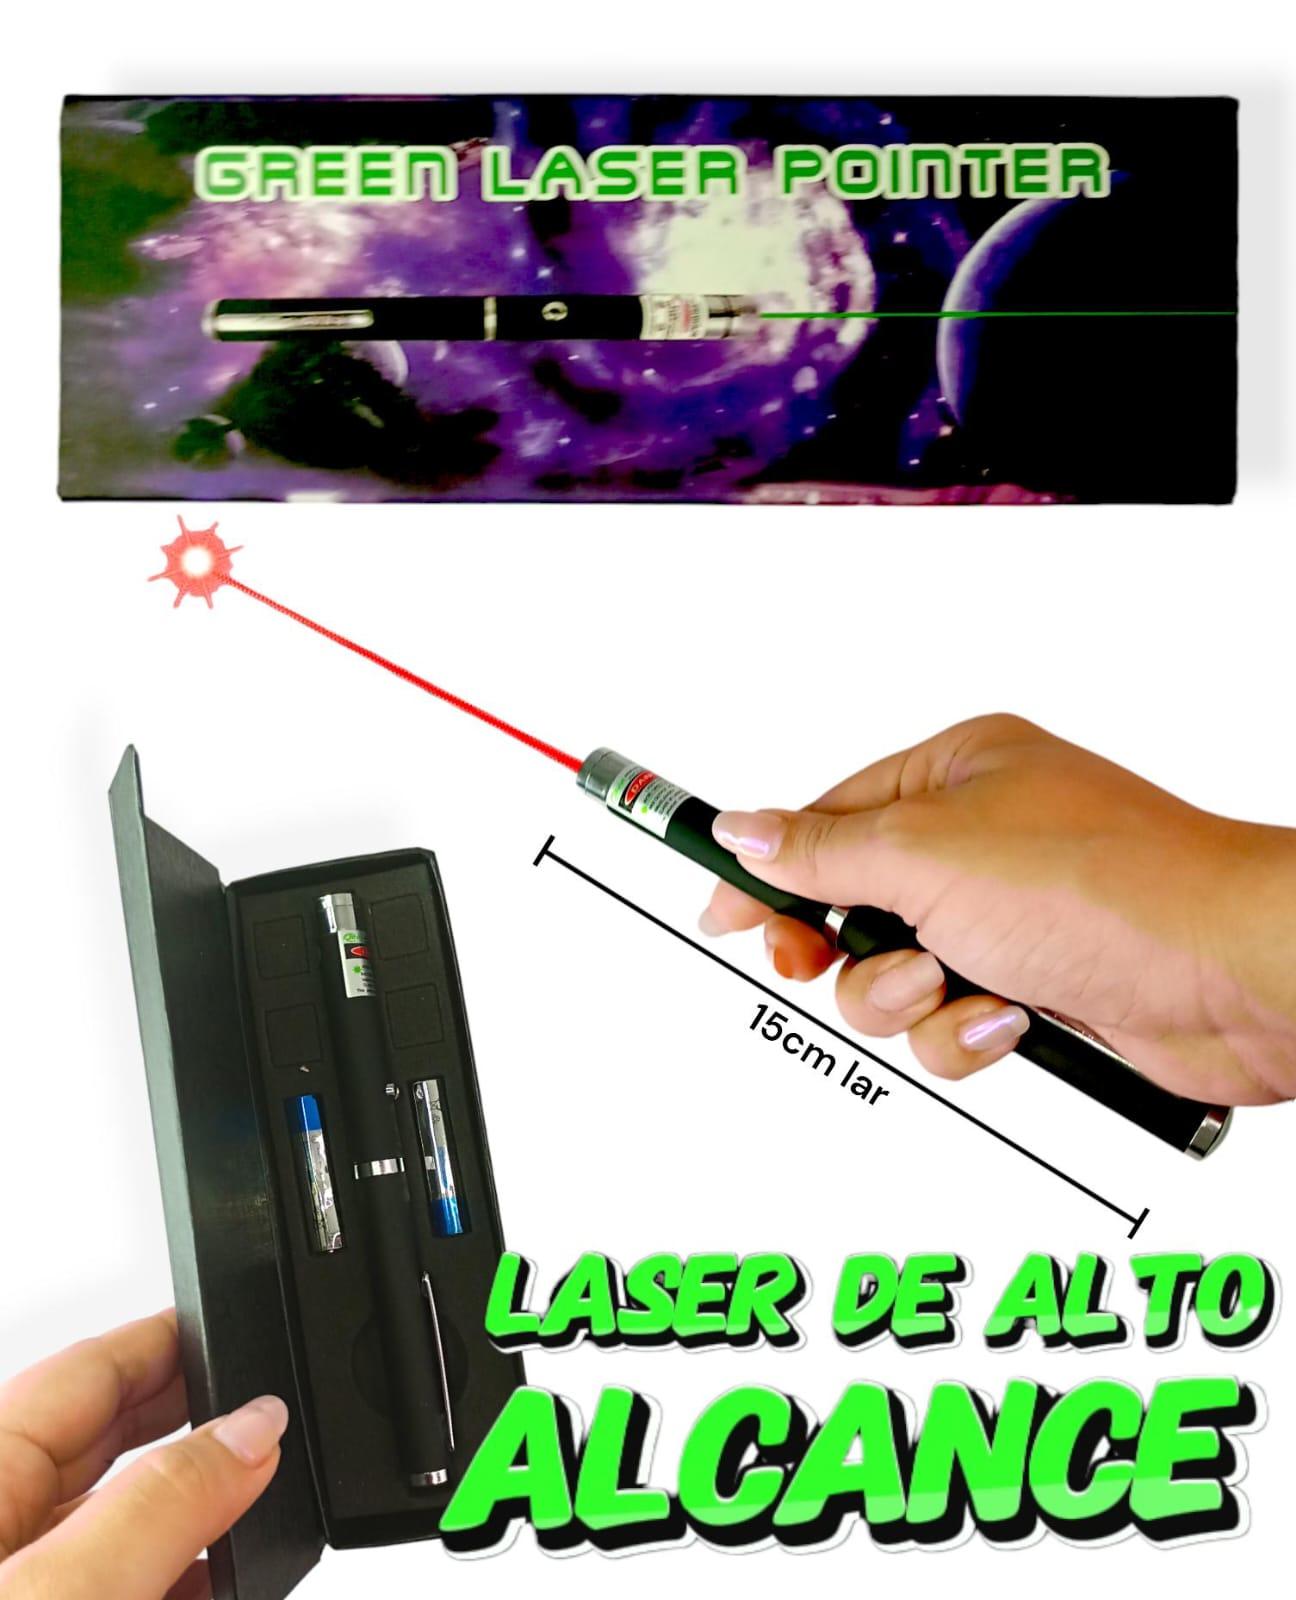 Laser de alto alcance